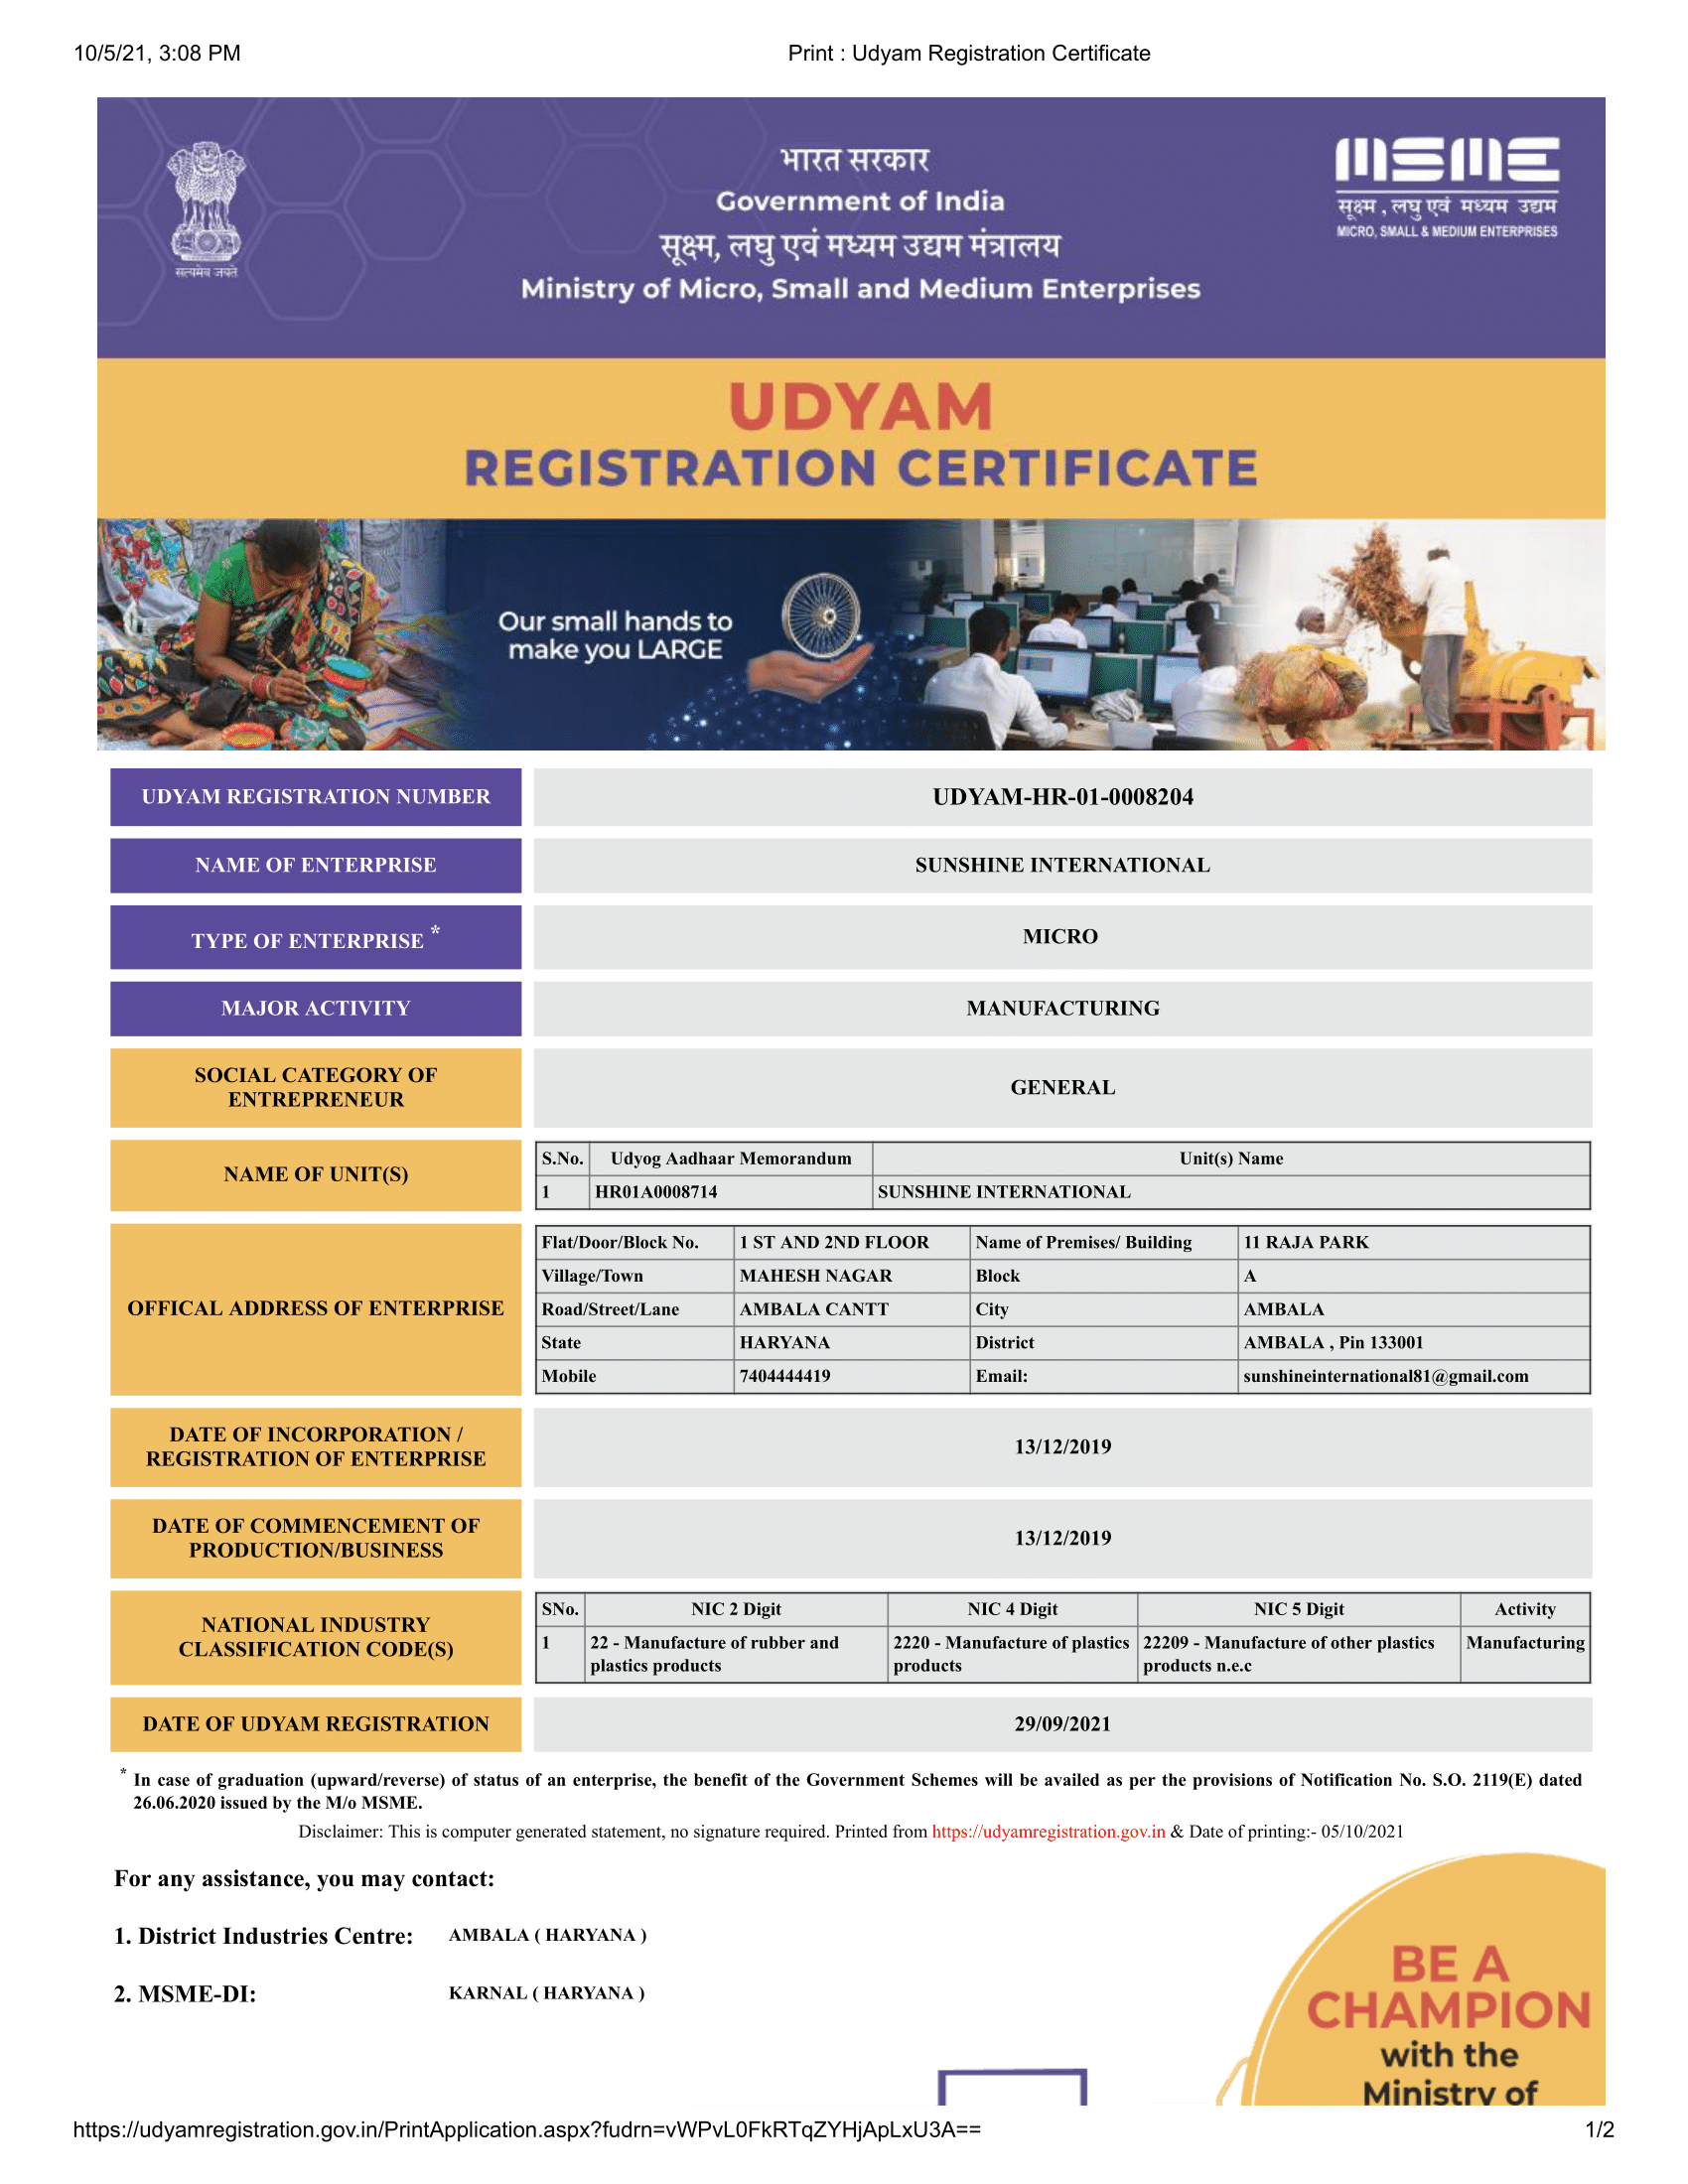 Print _ Udyam-Registration-Certi